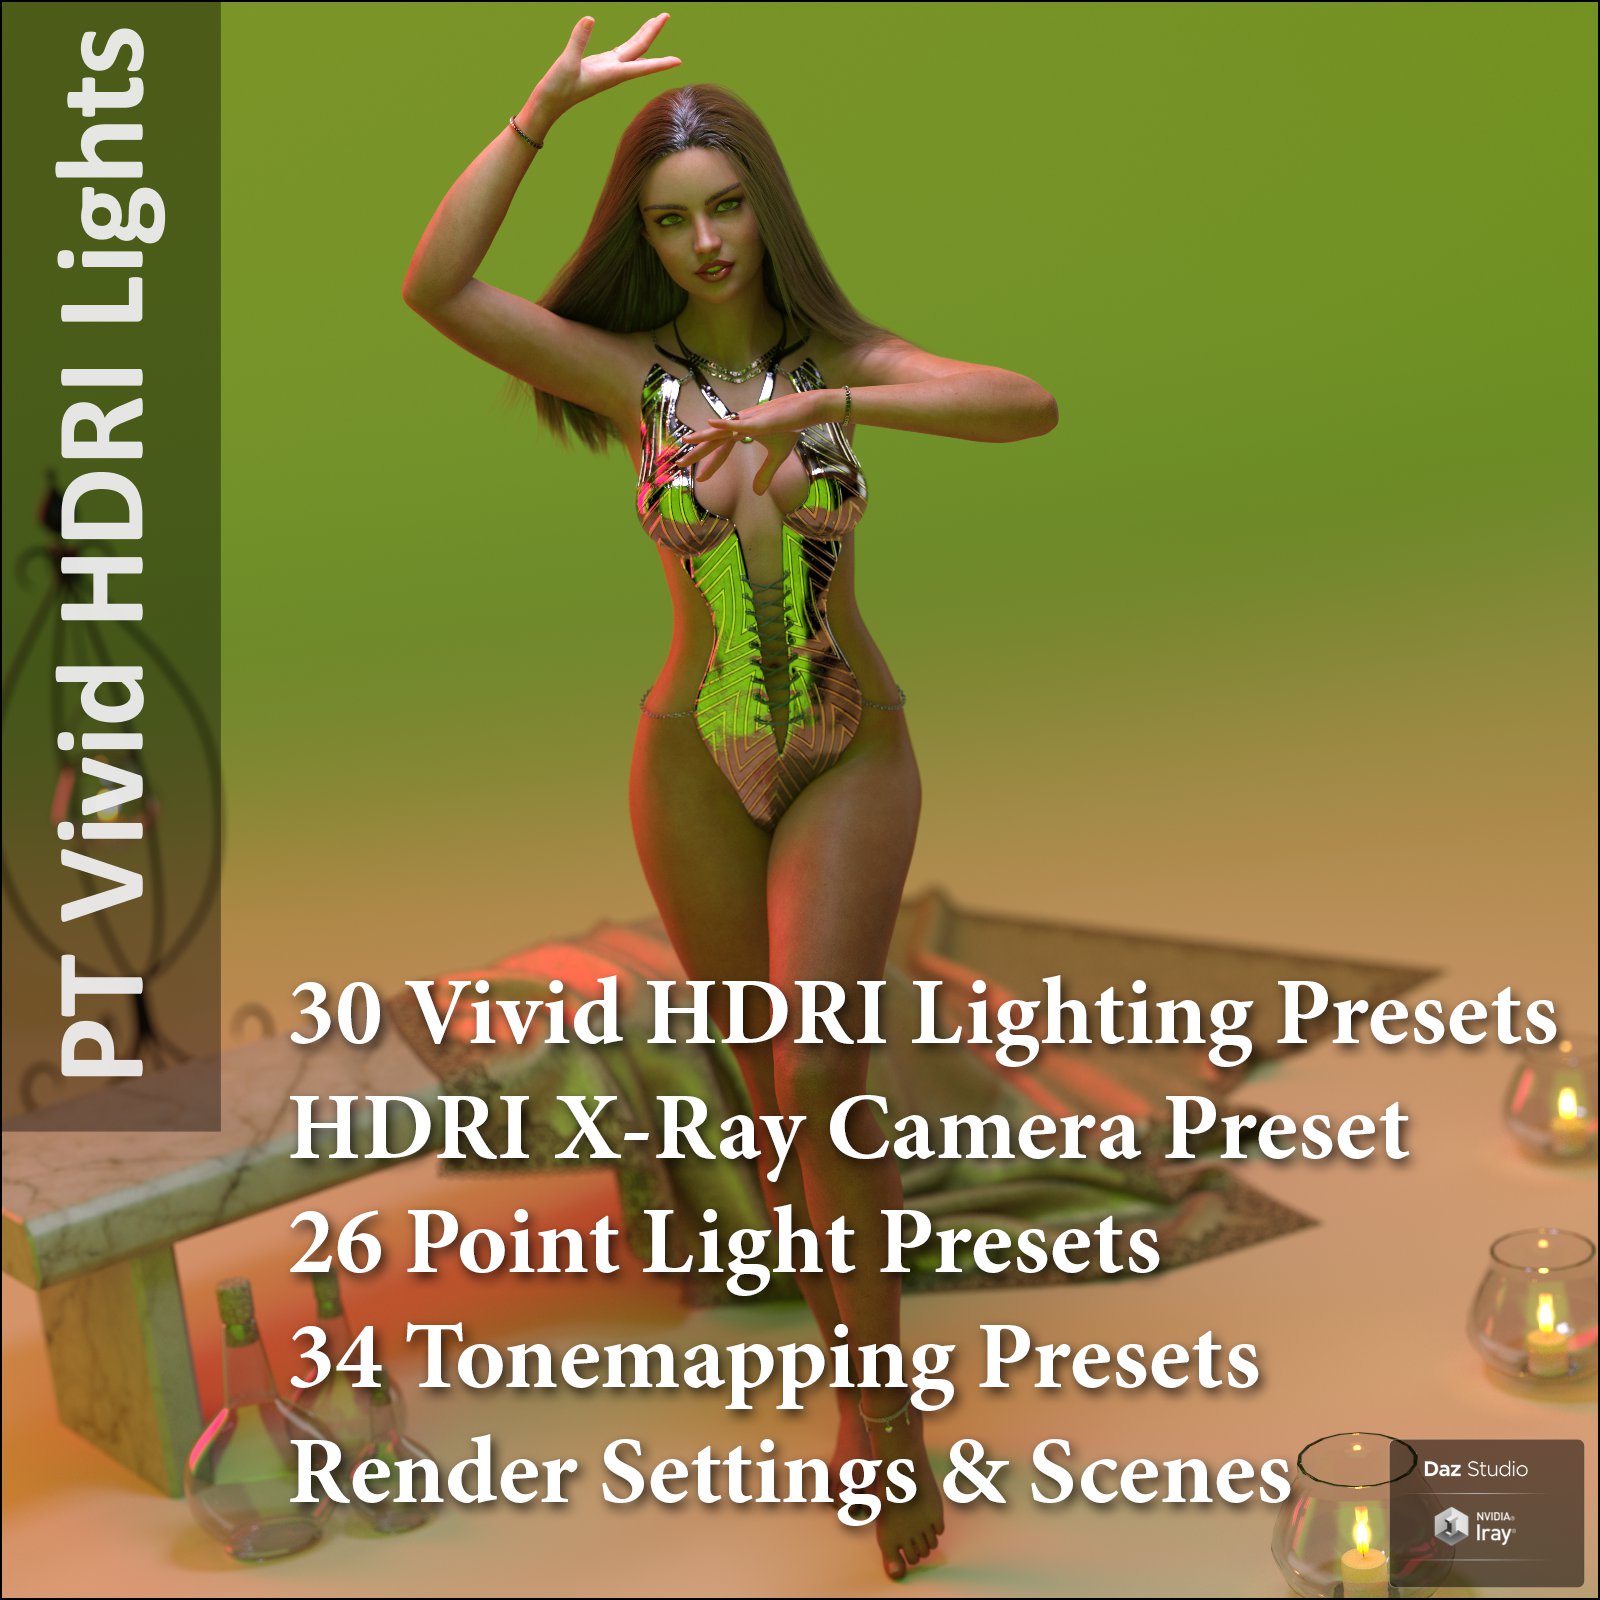 Paper Tiger’s Vivid HDRI Lighting_DAZ3DDL